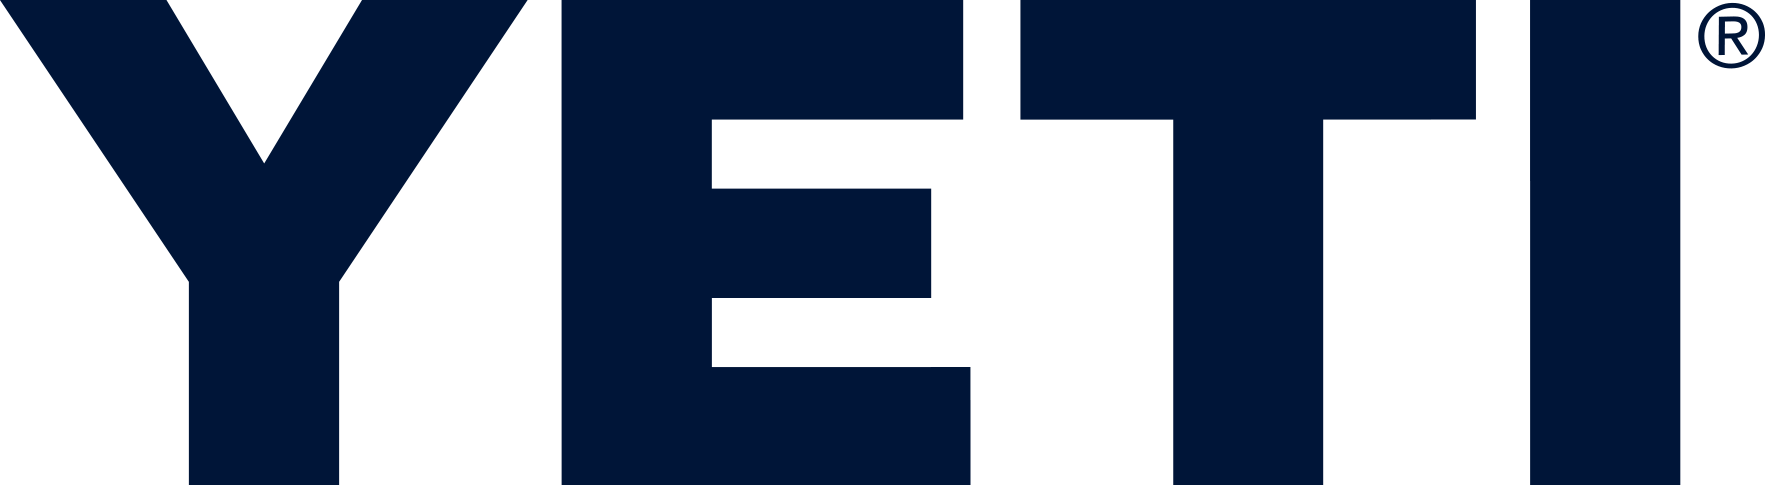 Navy-YETI-Logo-RGB-Web.png